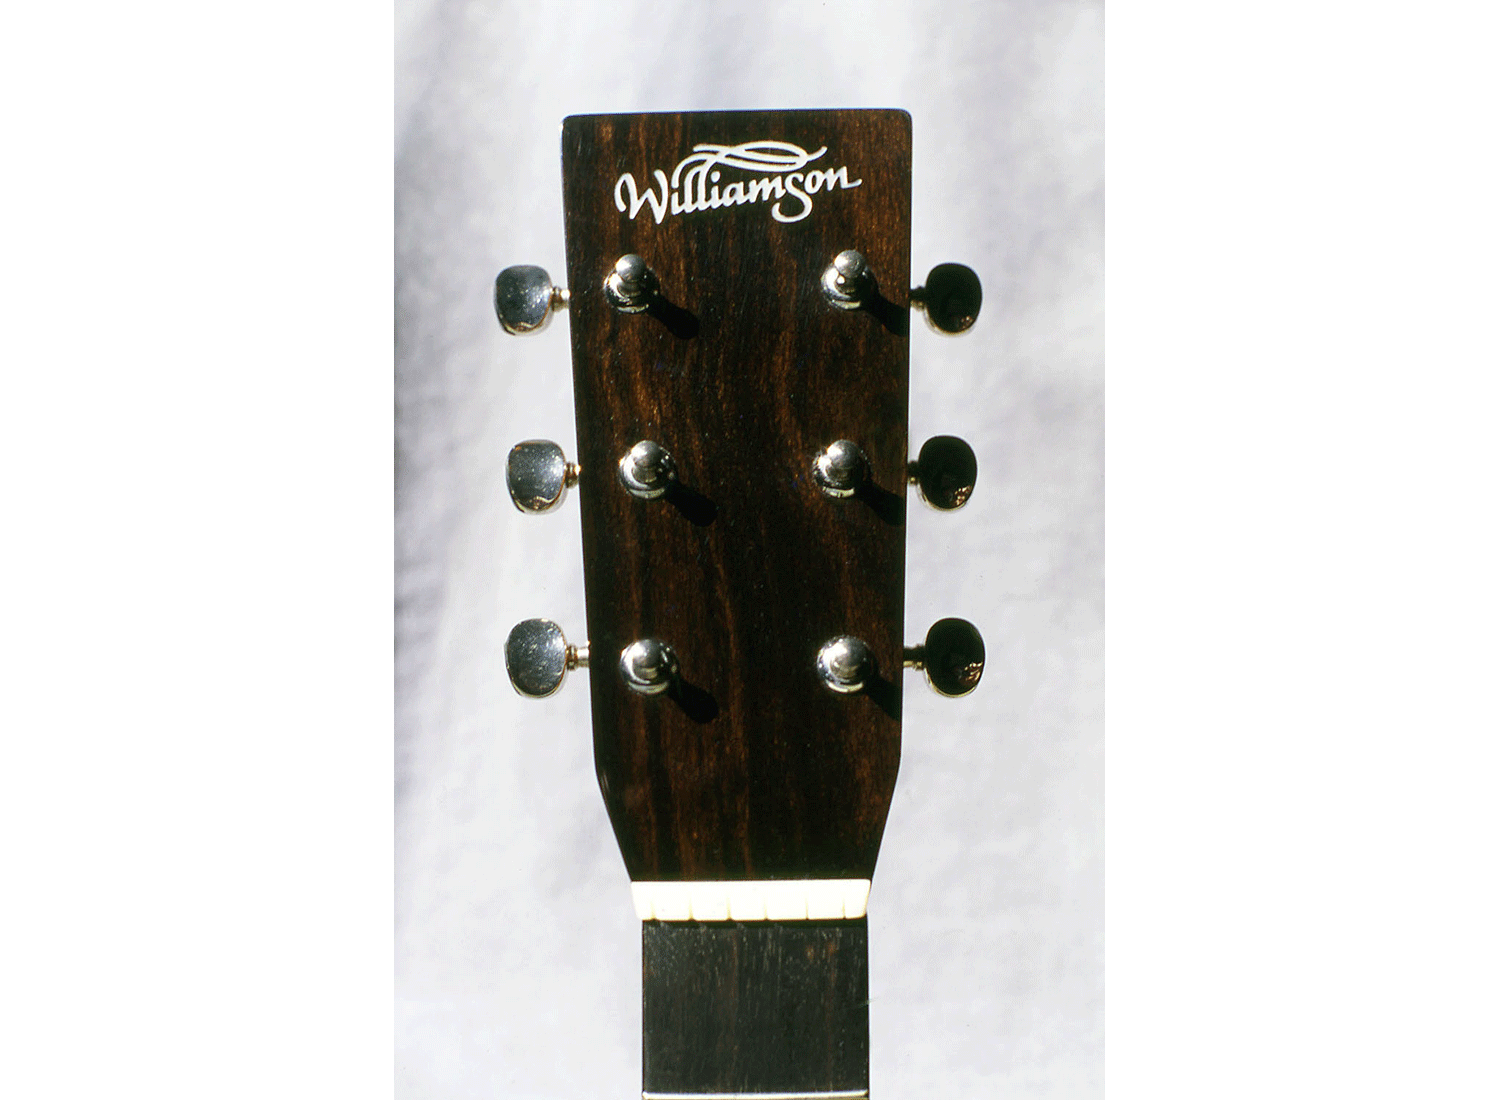 Williamson Guitars Logo on Headstock